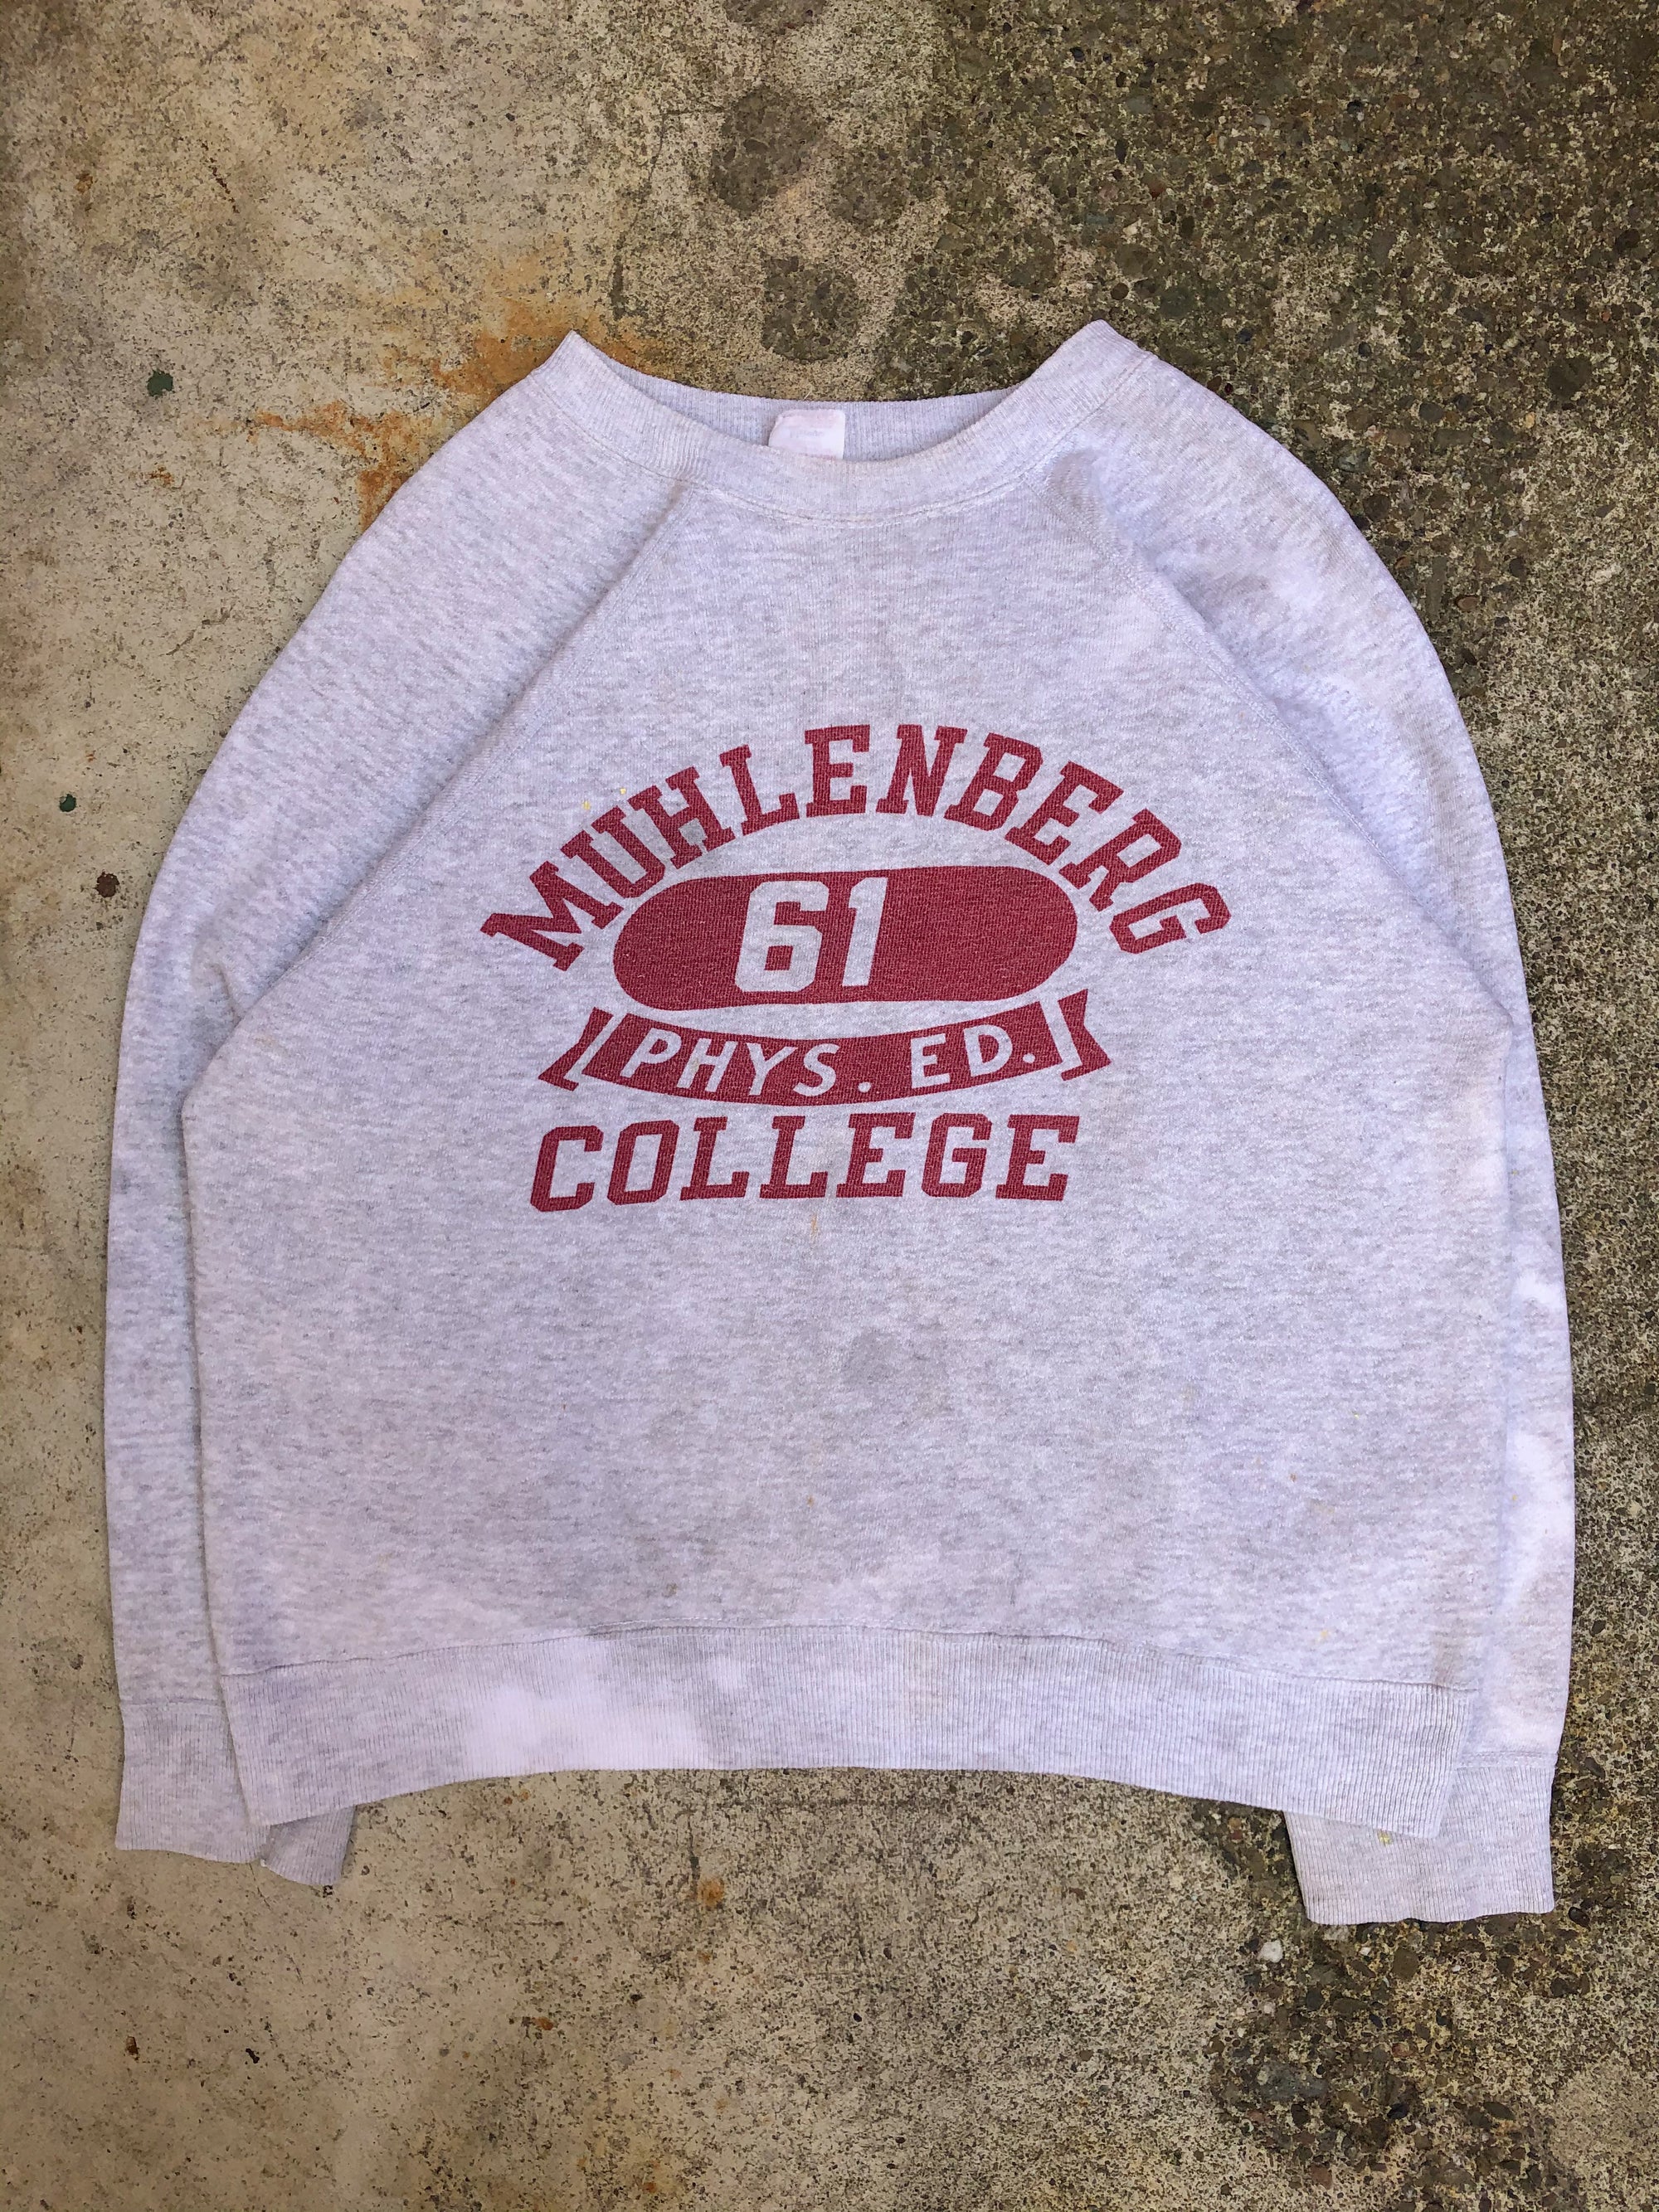 1960s Champion Running Man “Muhlenberg College” Raglan Sweatshirt